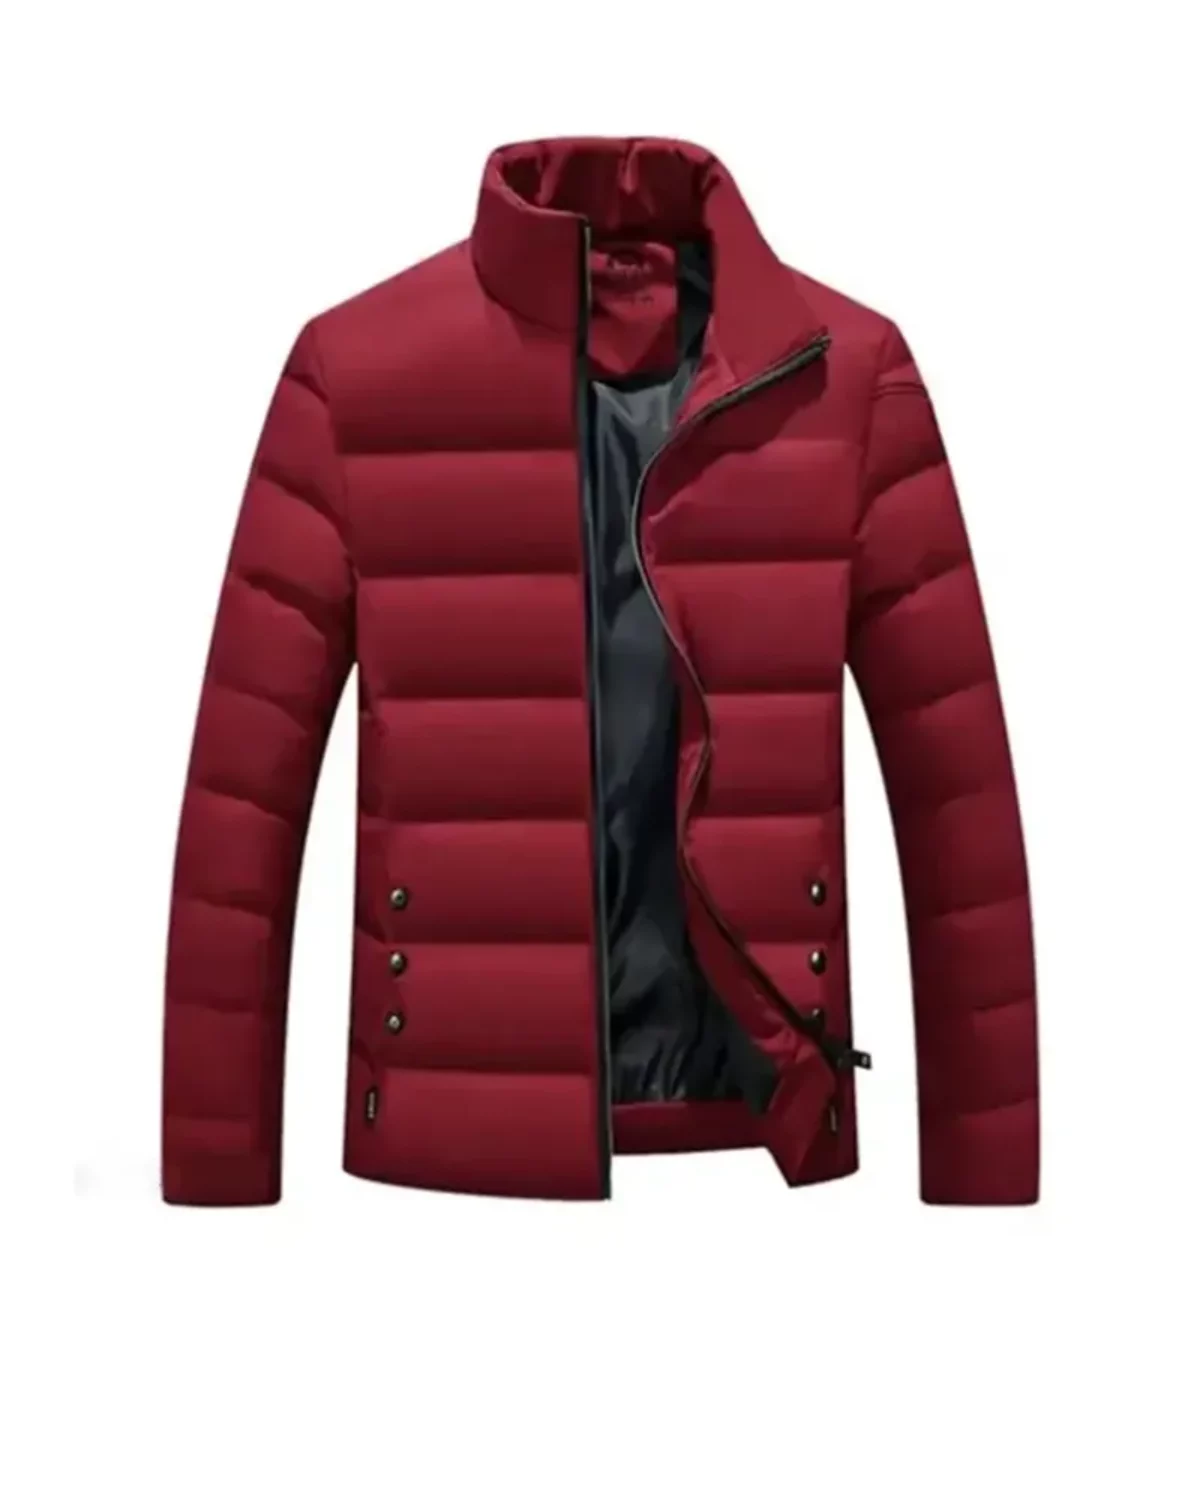 Men's Red Jackets, Coats, & Vests